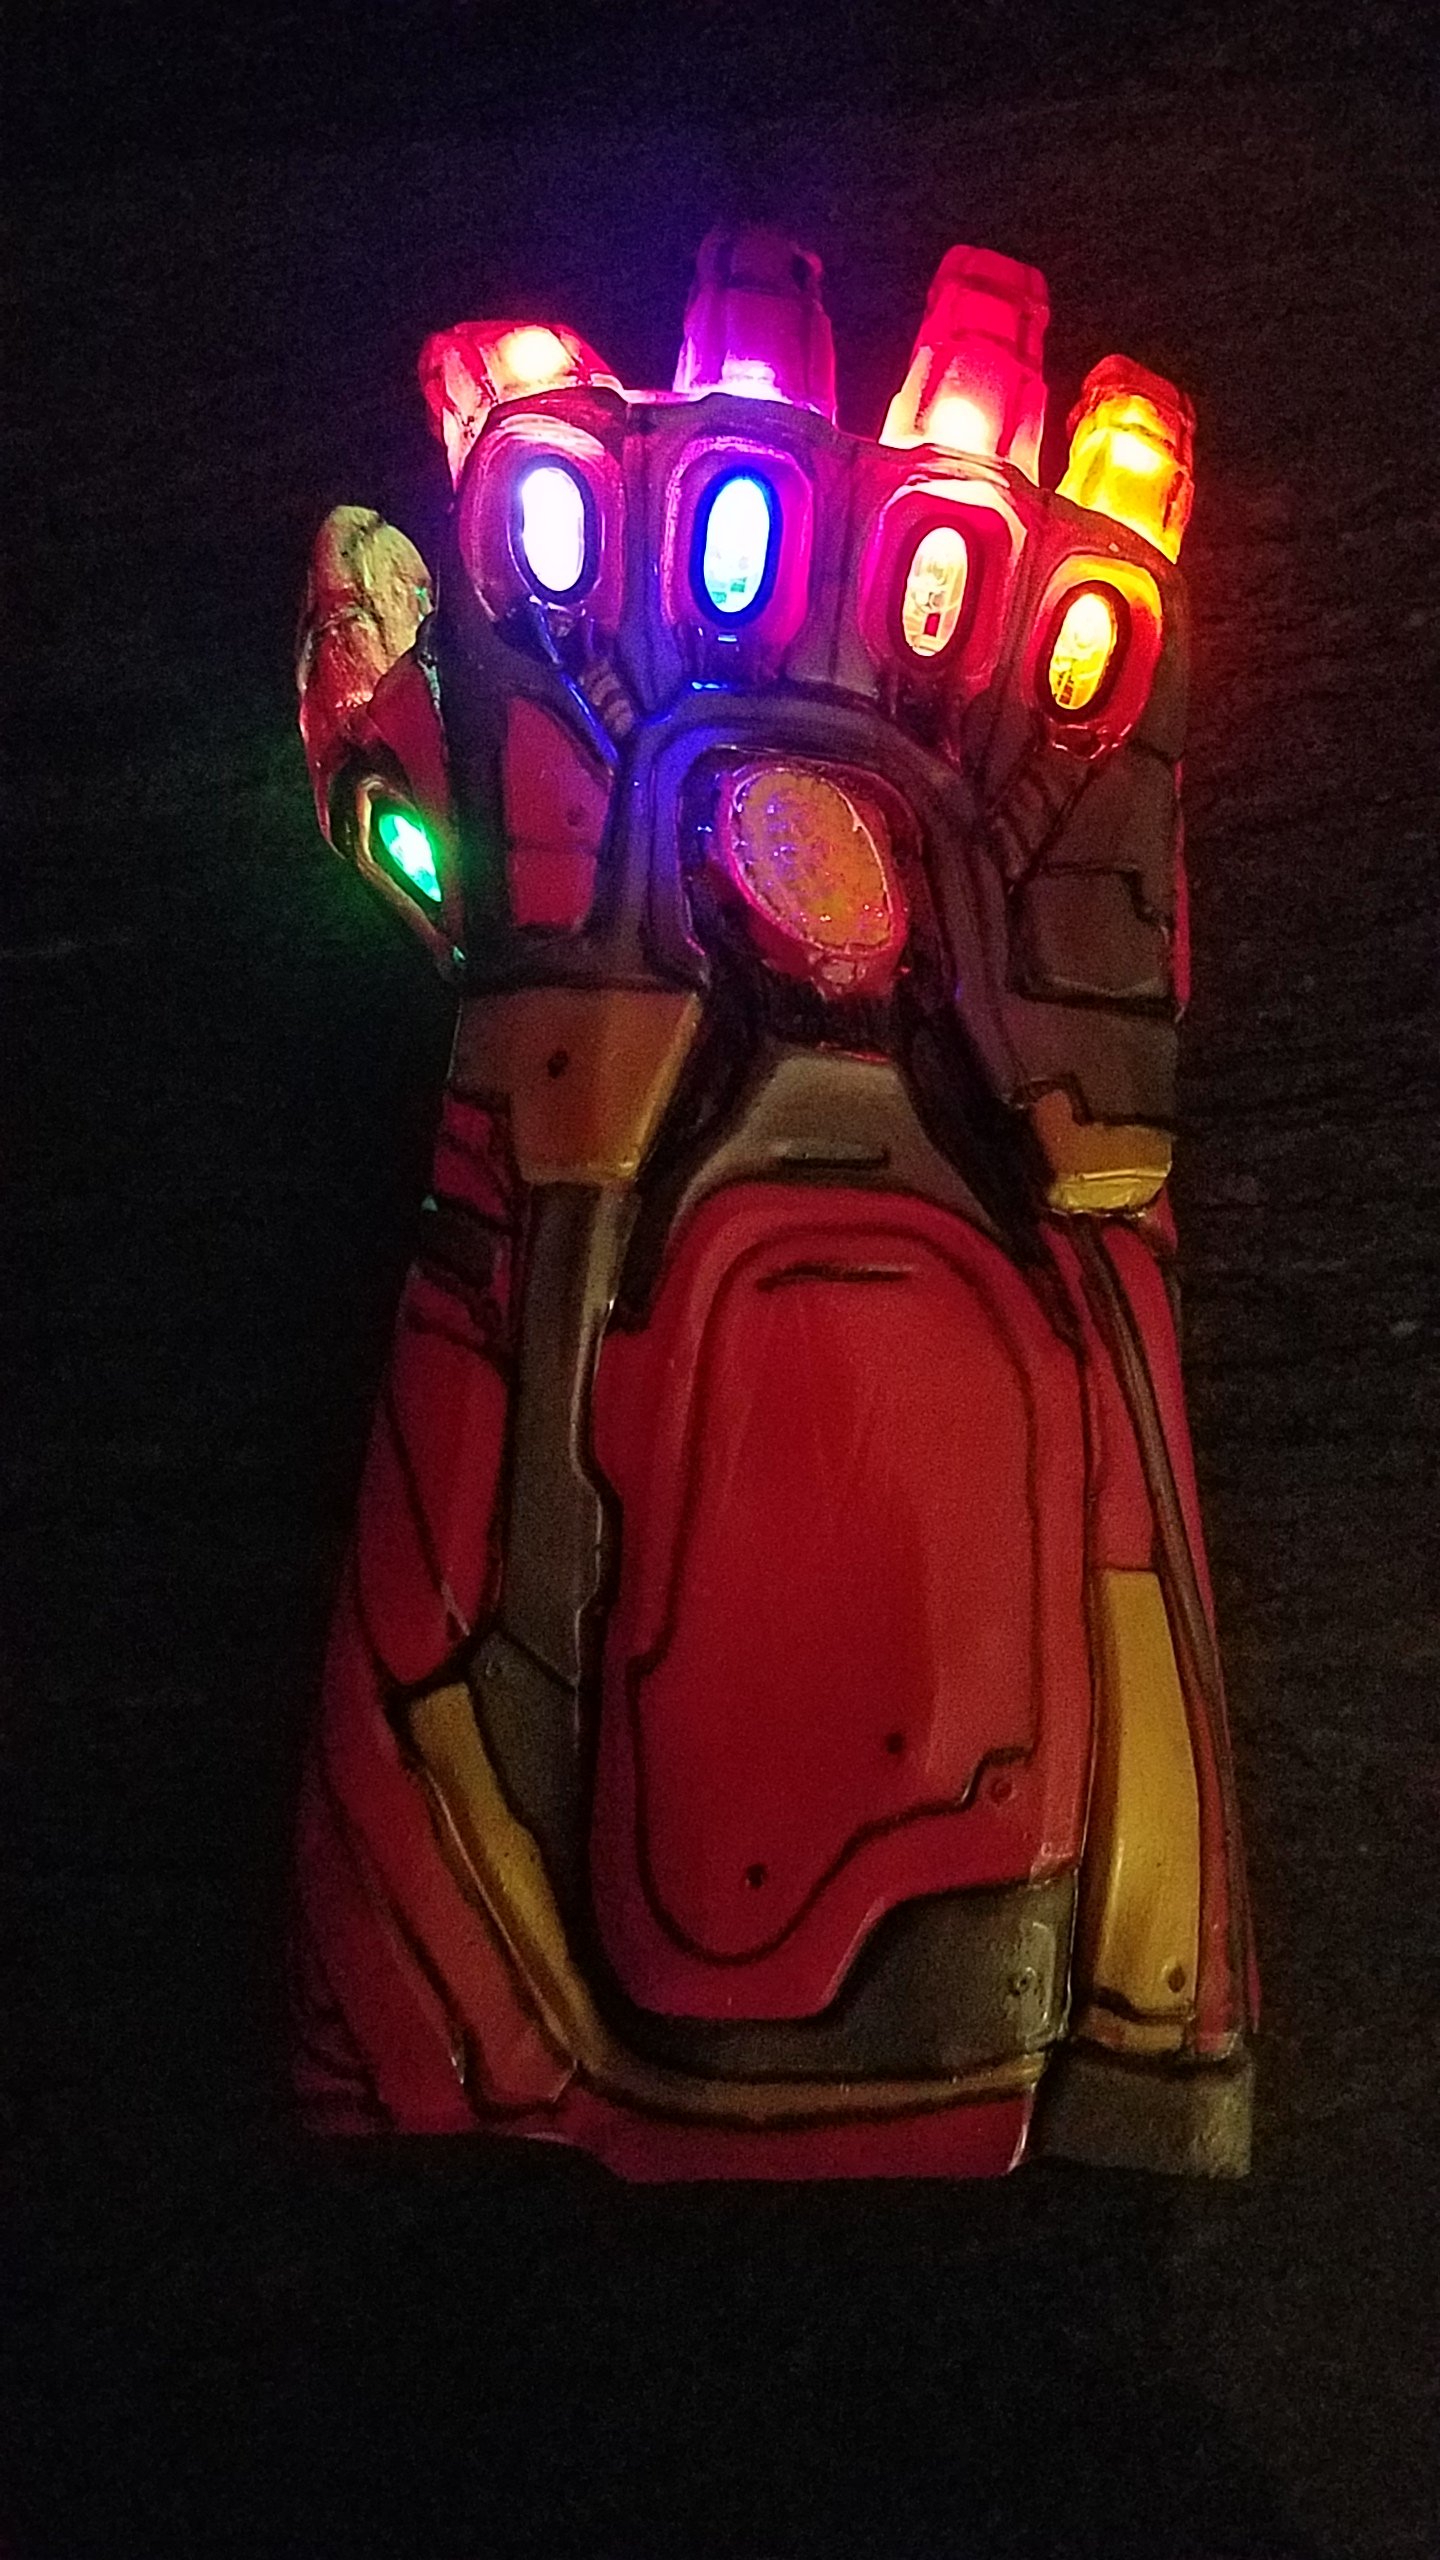 Iron Man Endgame gauntlet with lights